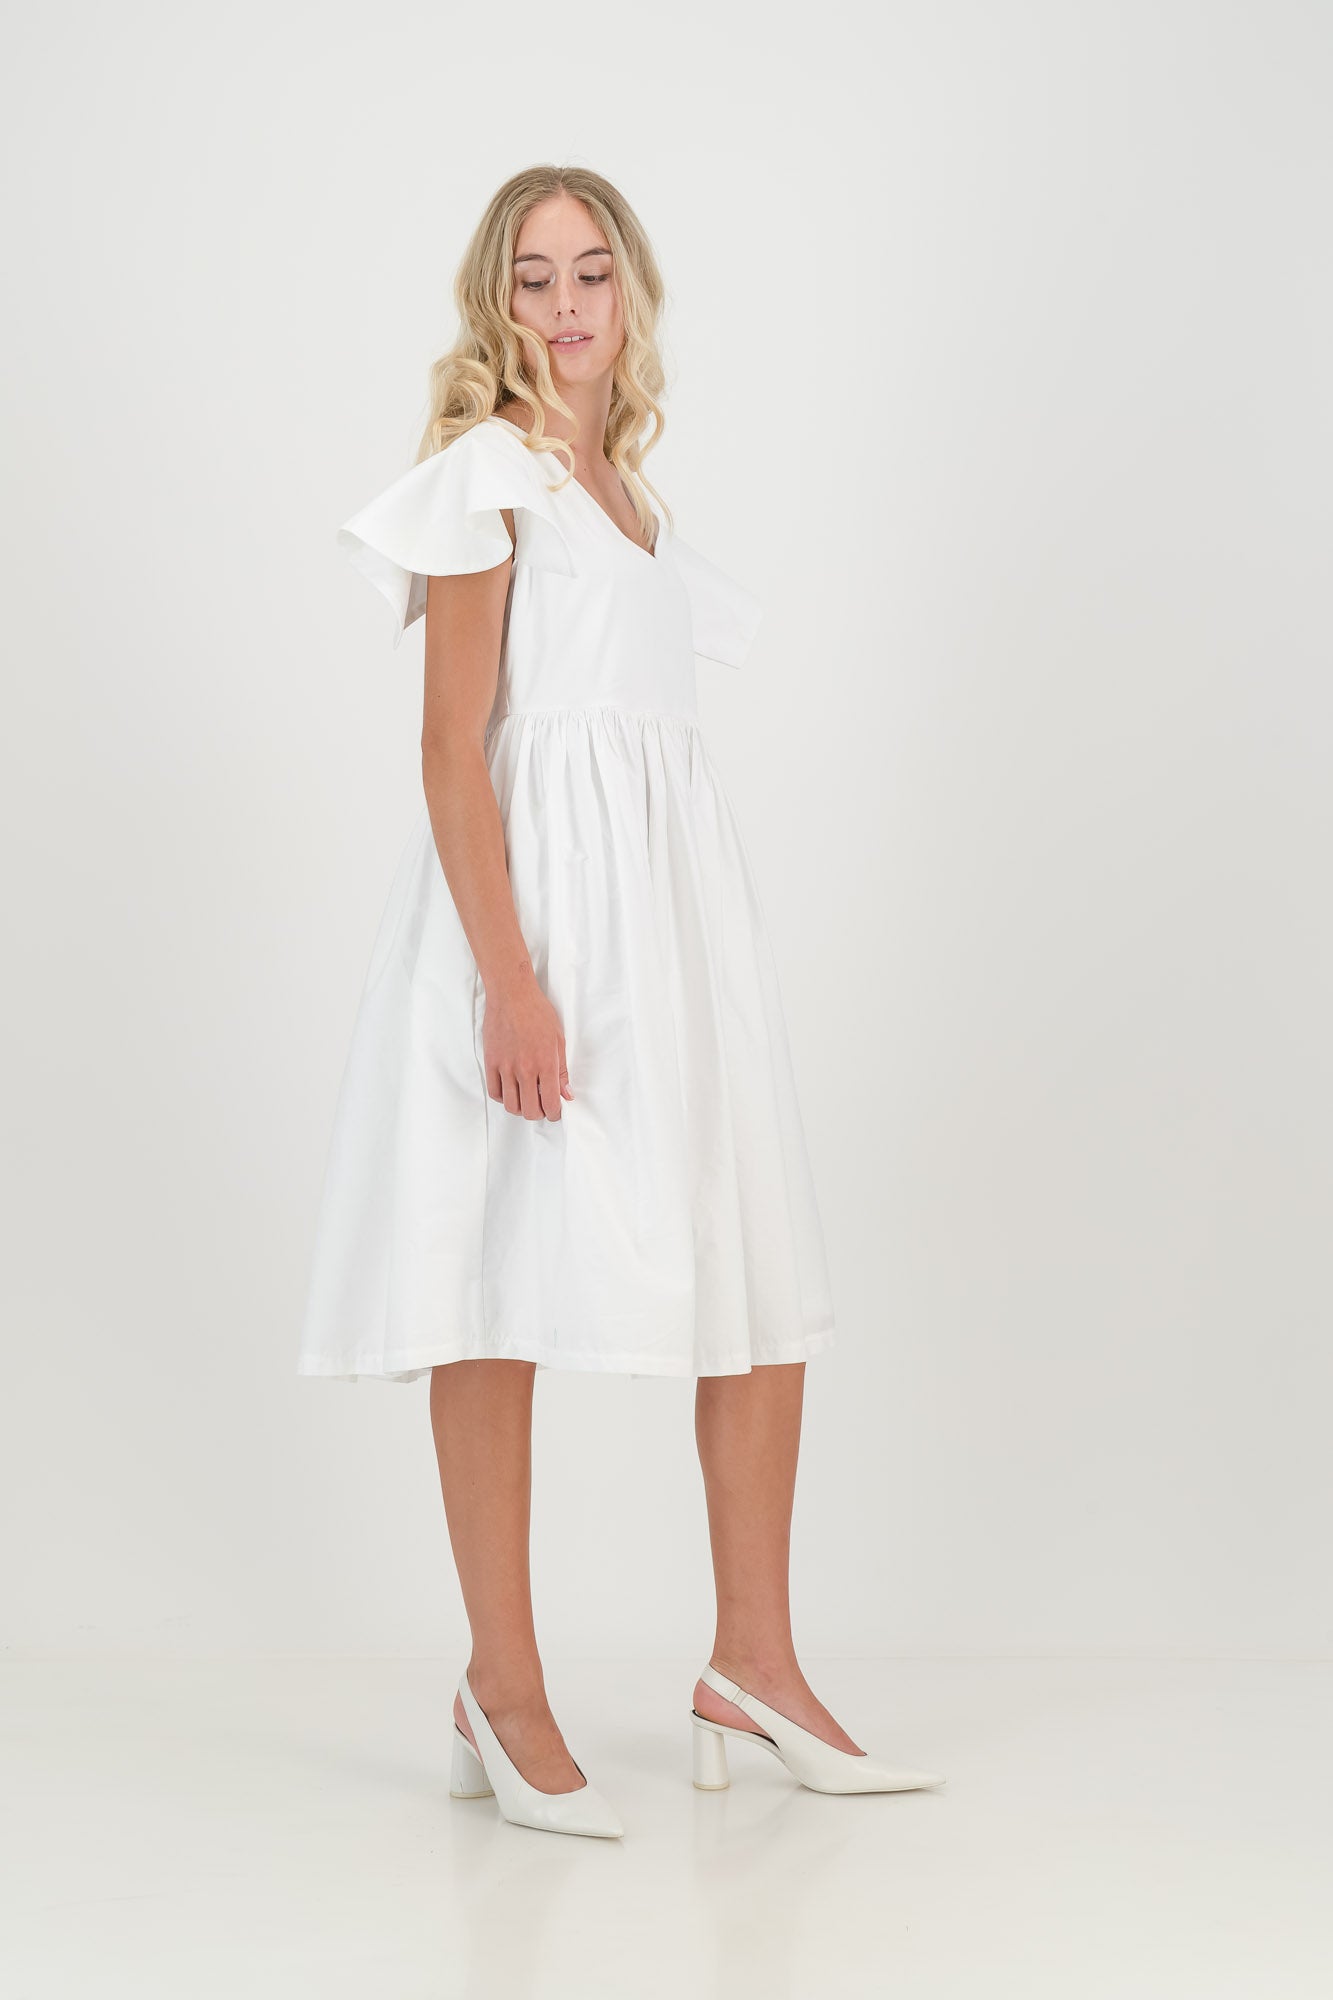 The White Poplin Daisy Dress